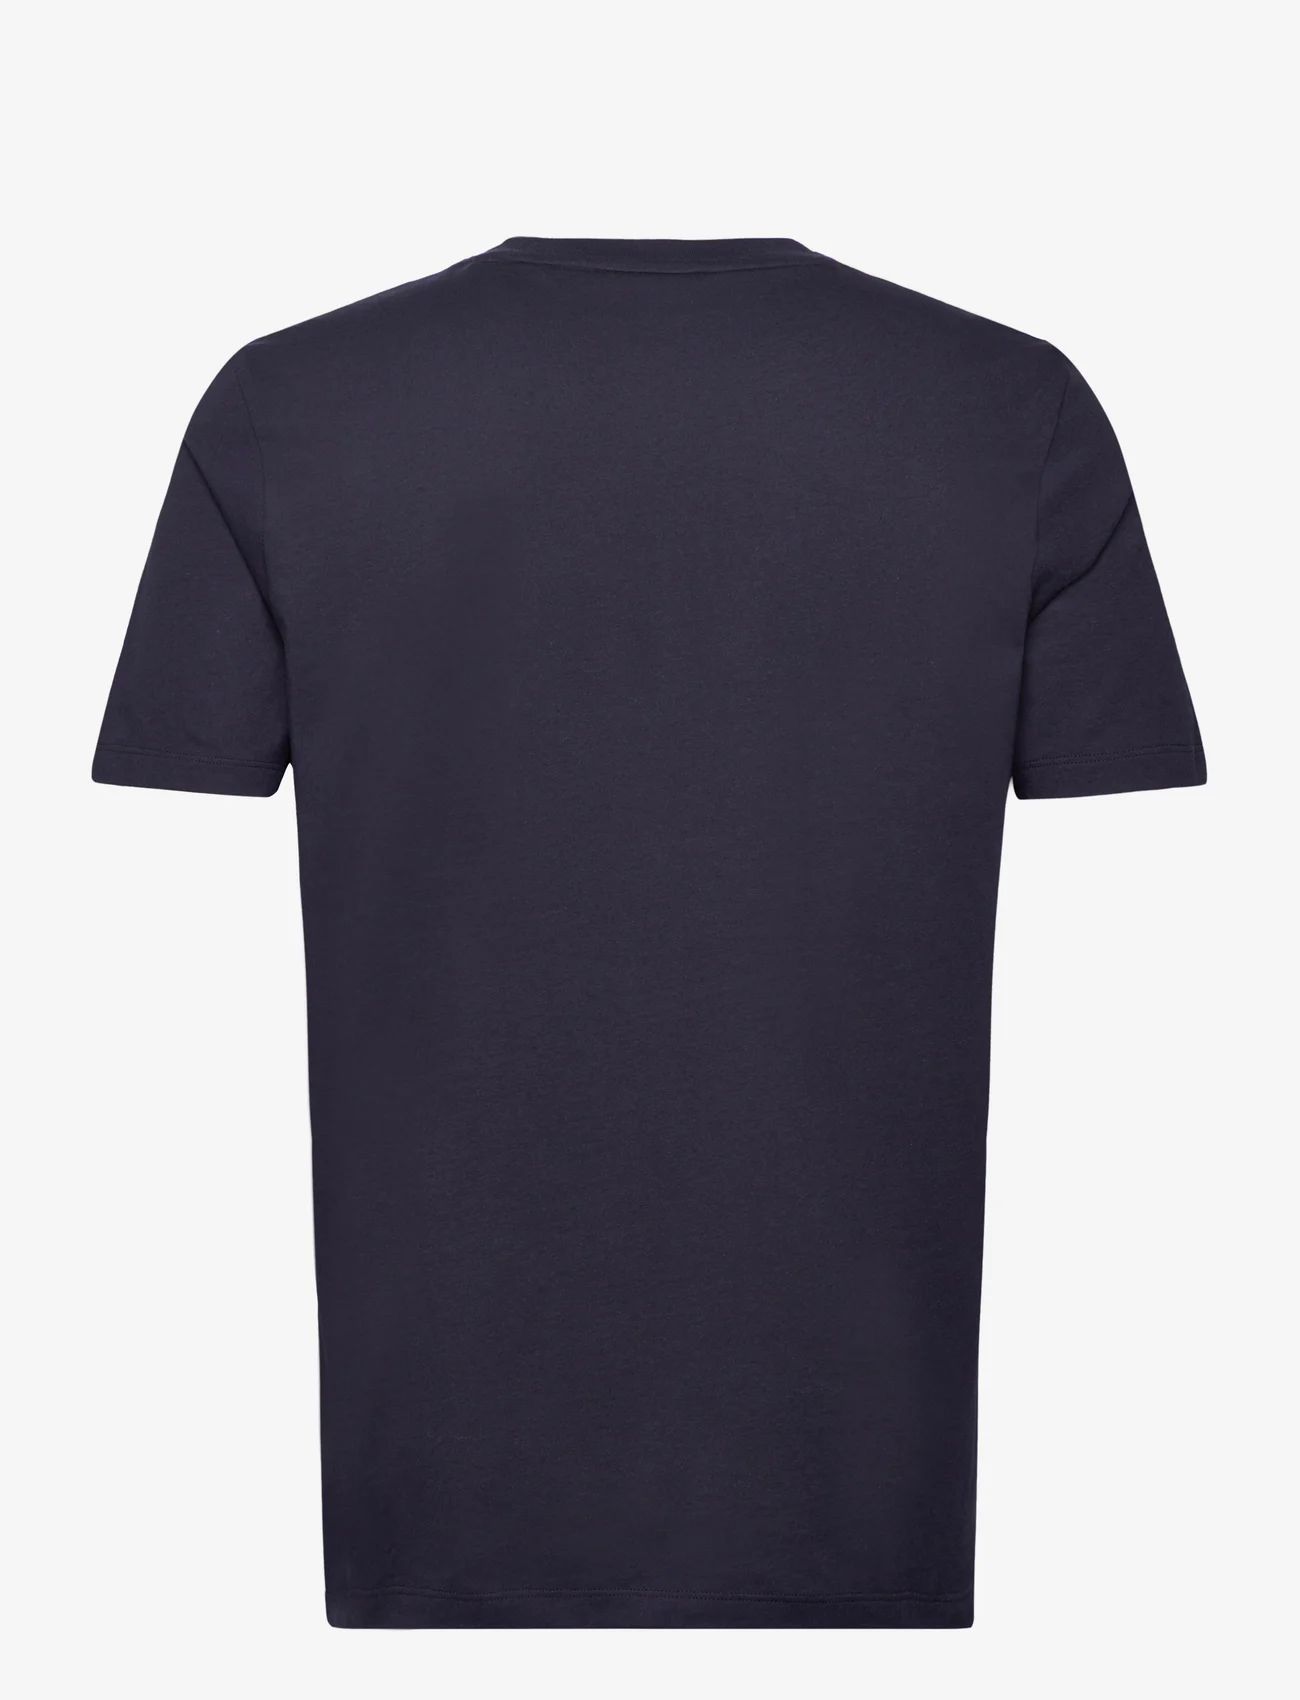 HUGO - Dulivio - kortärmade t-shirts - dark blue - 1